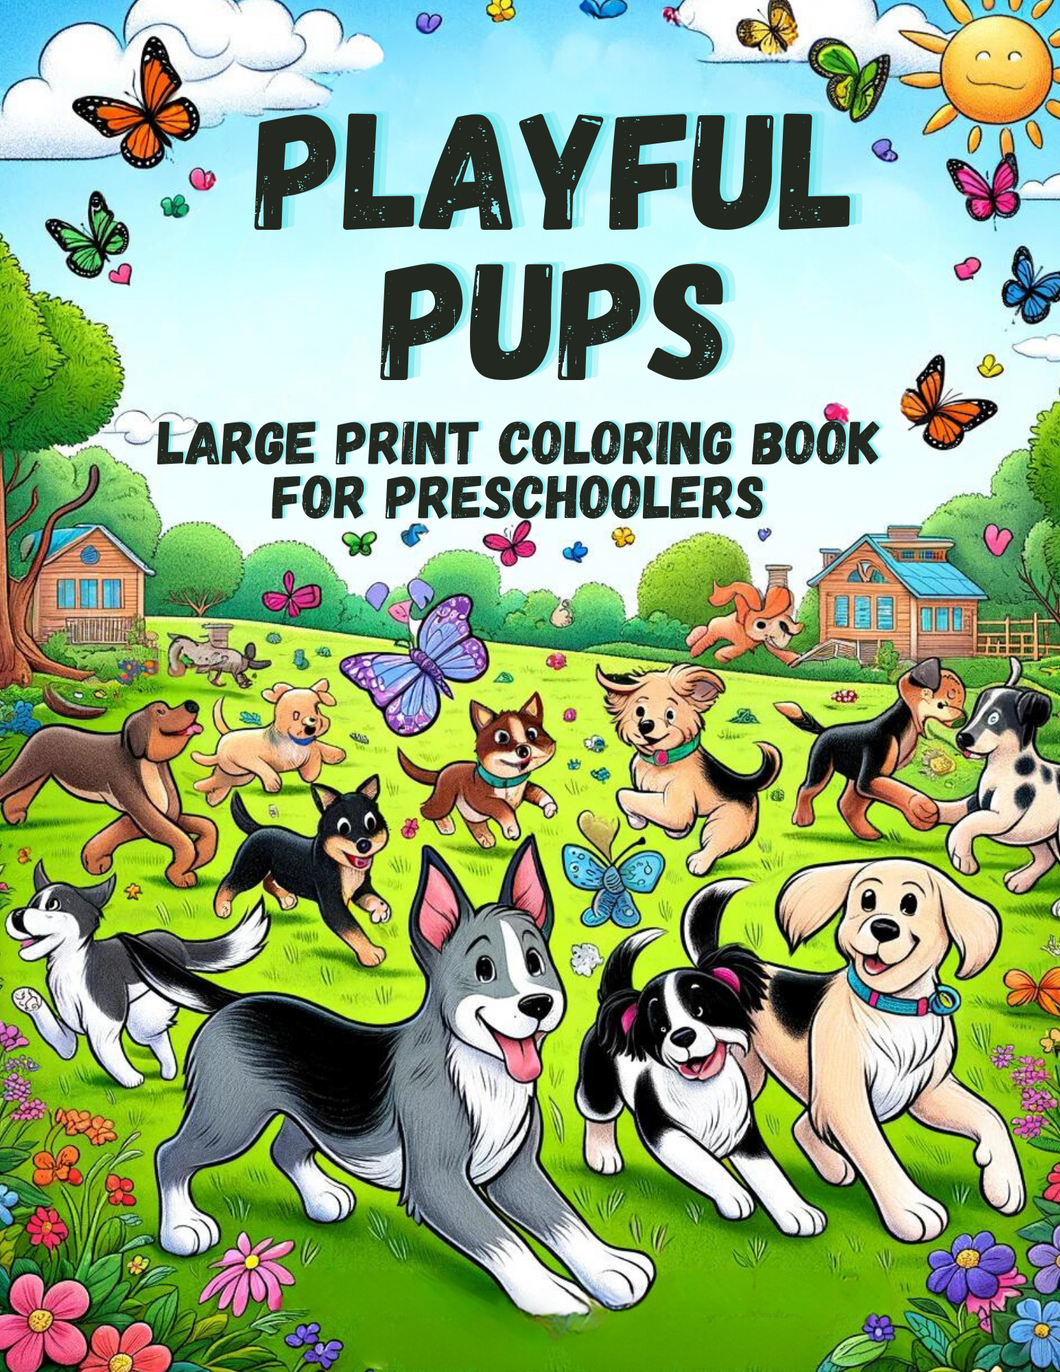 Playful Pups:  Large Print Coloring Book for Preschoolers